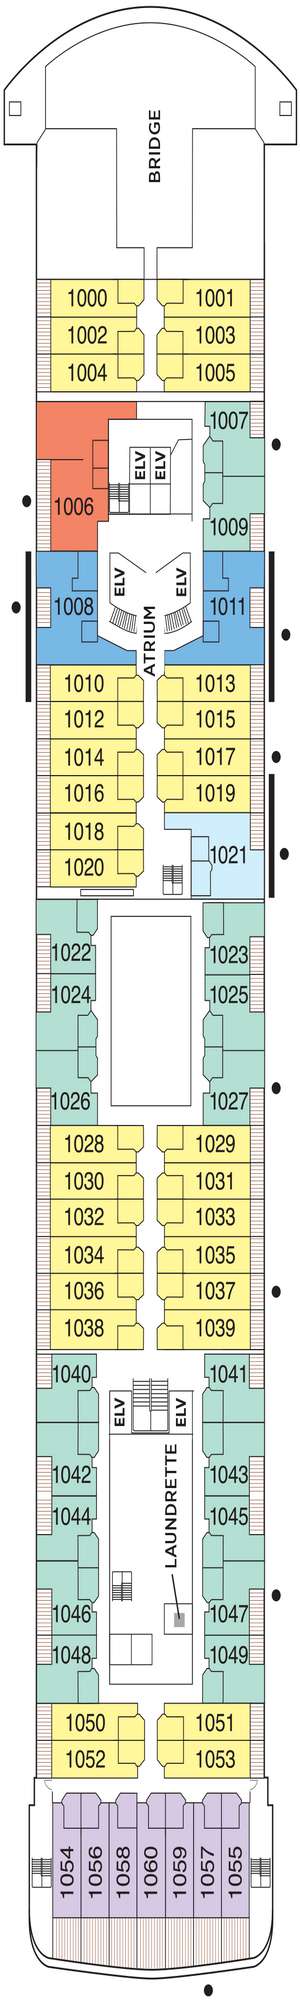 Deck plan for Regent Seven Seas Voyager